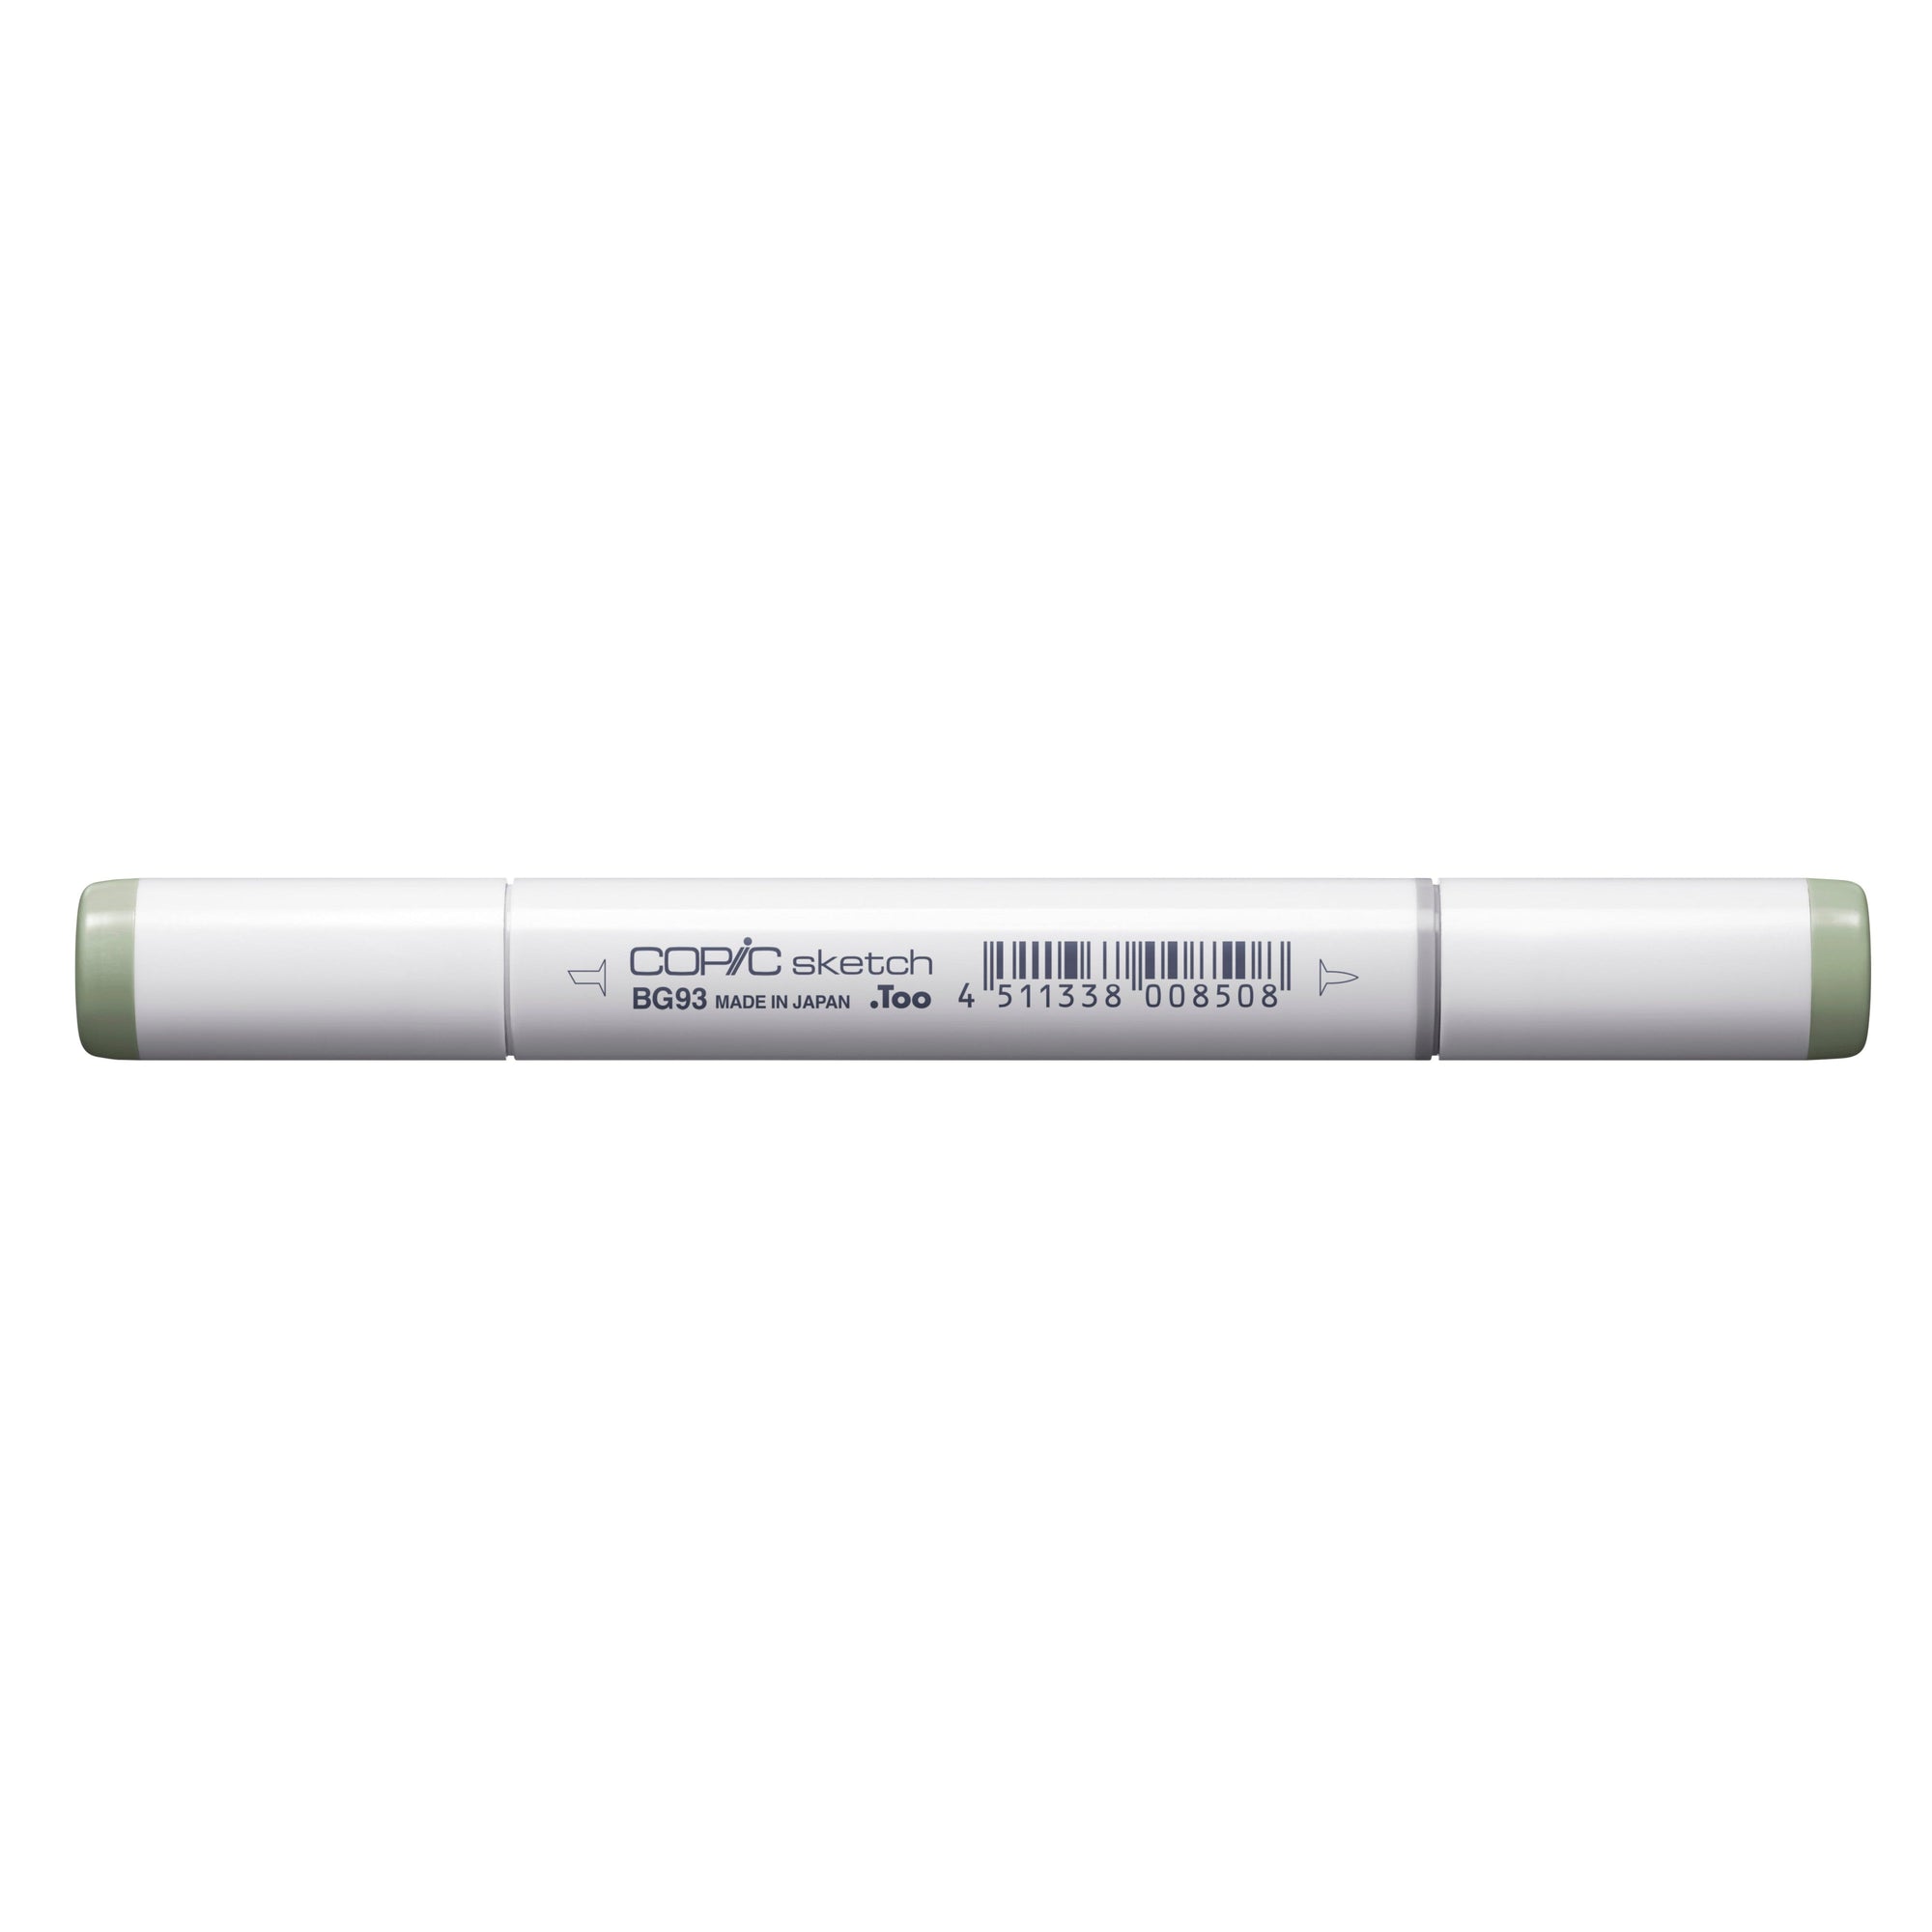 Copic - Sketch Marker - Green Gray - BG93-ScrapbookPal